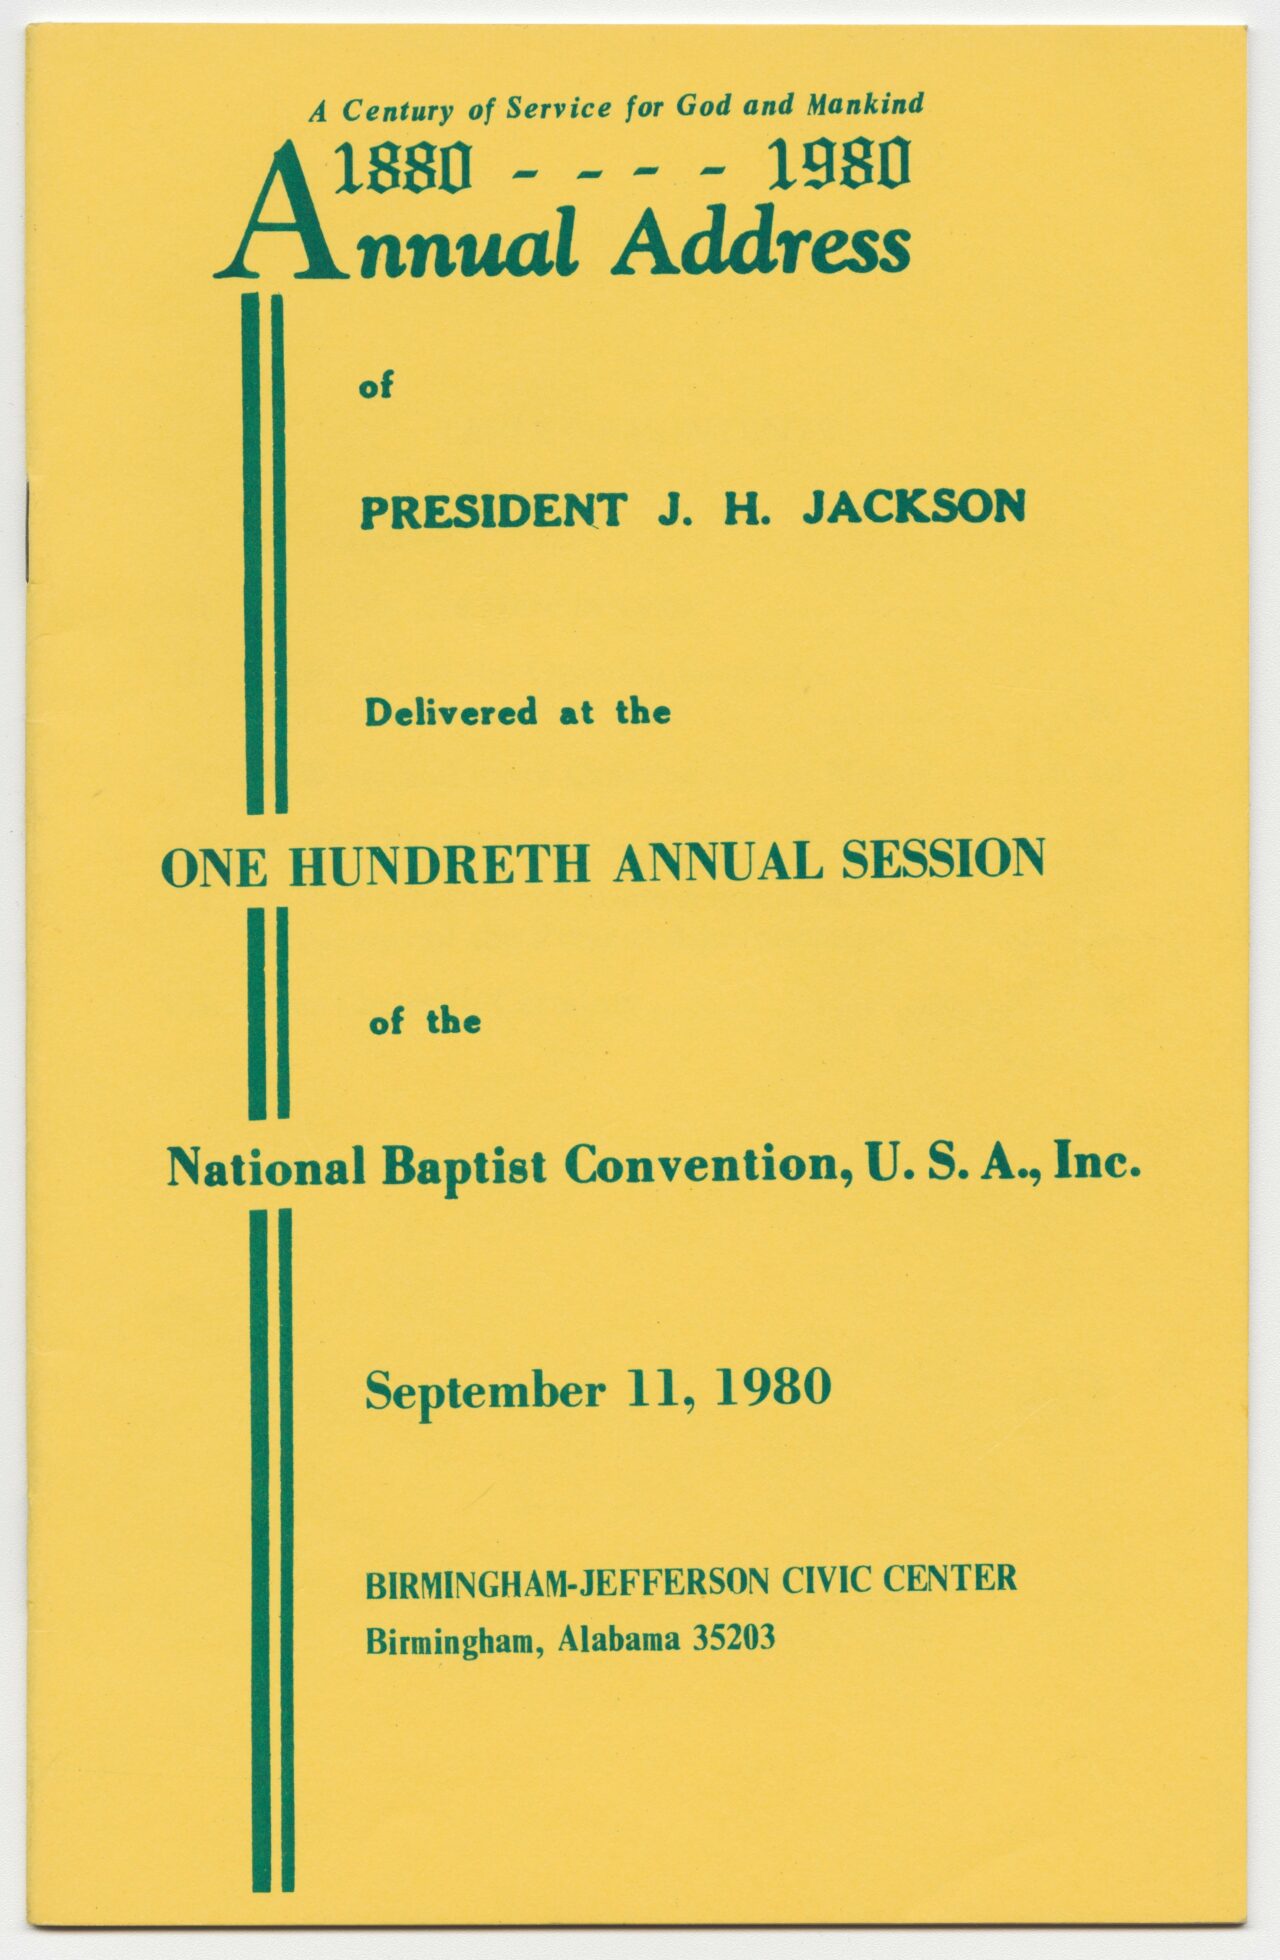 Exhibition-GAC-Joseph H Jackson-address